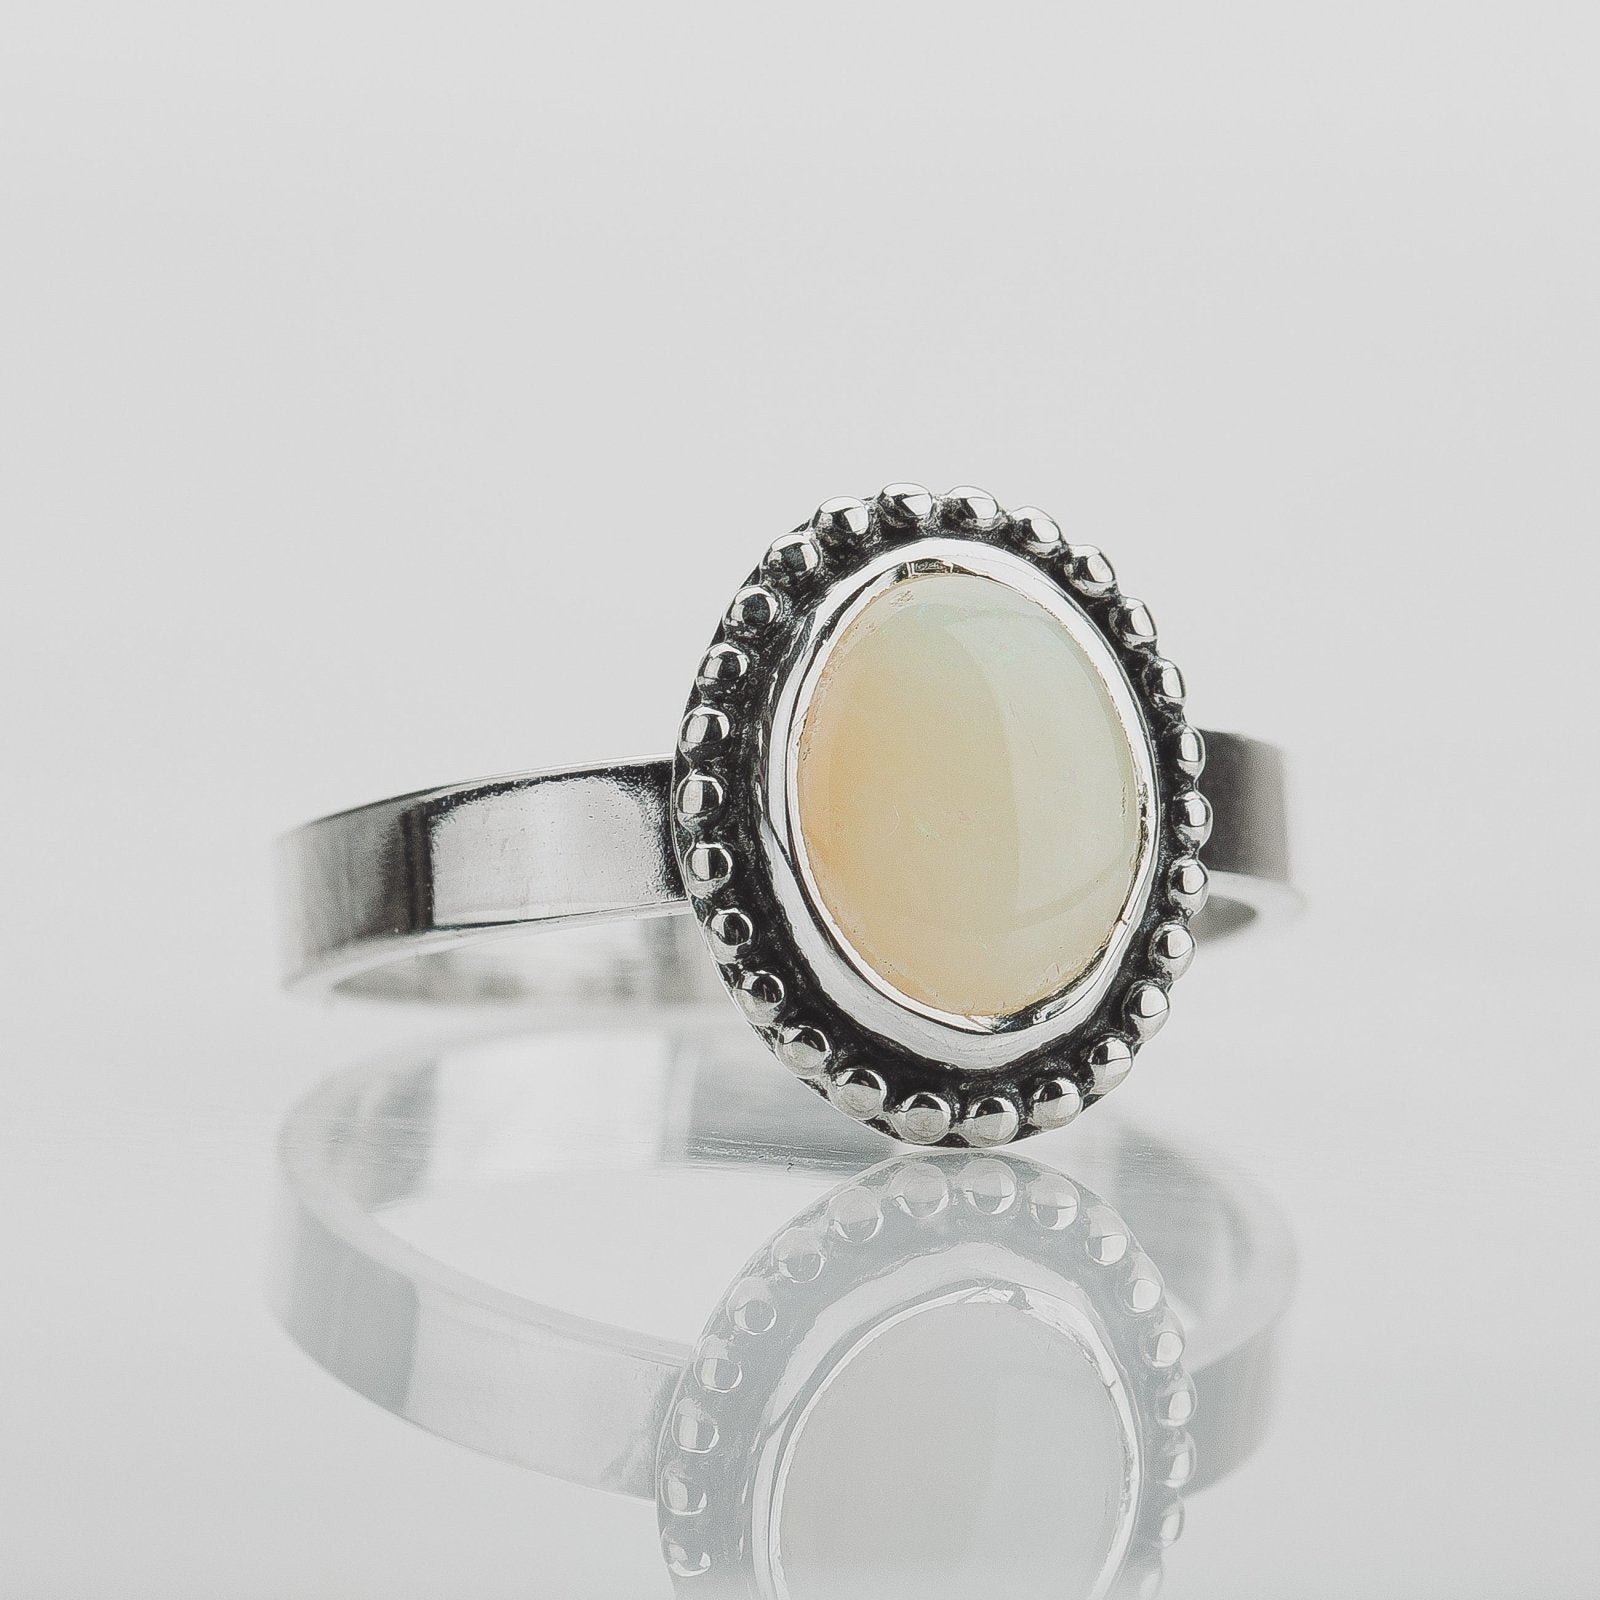 Size 7.25 Opal Ring - Melanie Golden Jewelry - gemstone rings, rings